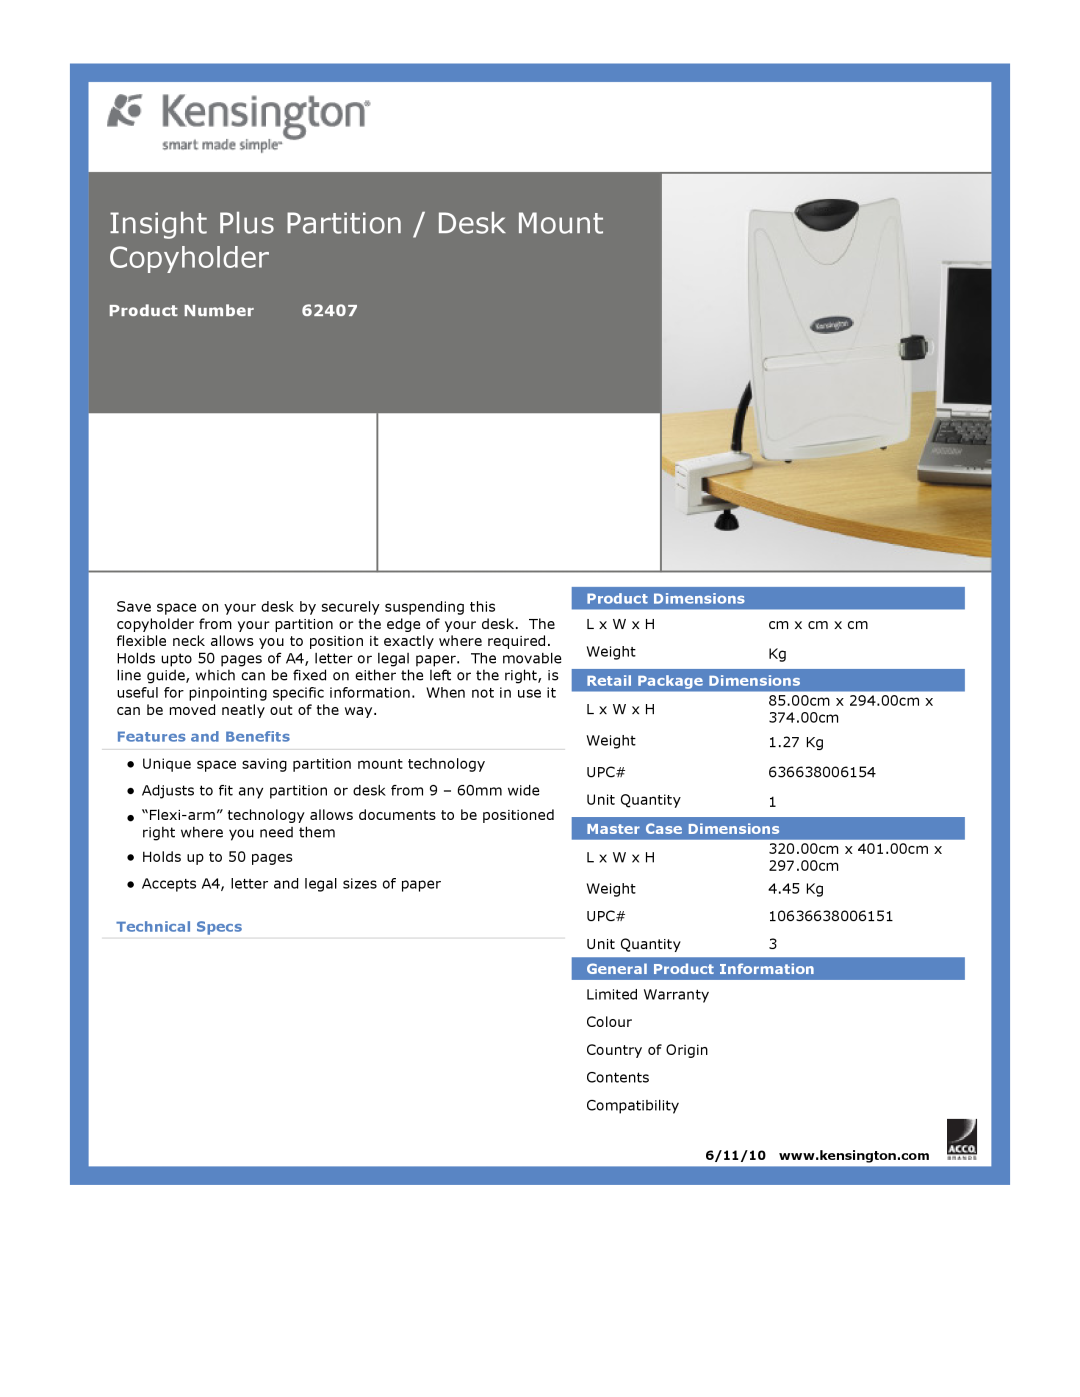 Kensington 62407 dimensions Insight Plus Partition / Desk Mount Copyholder, Product Number, Features and Benefits 